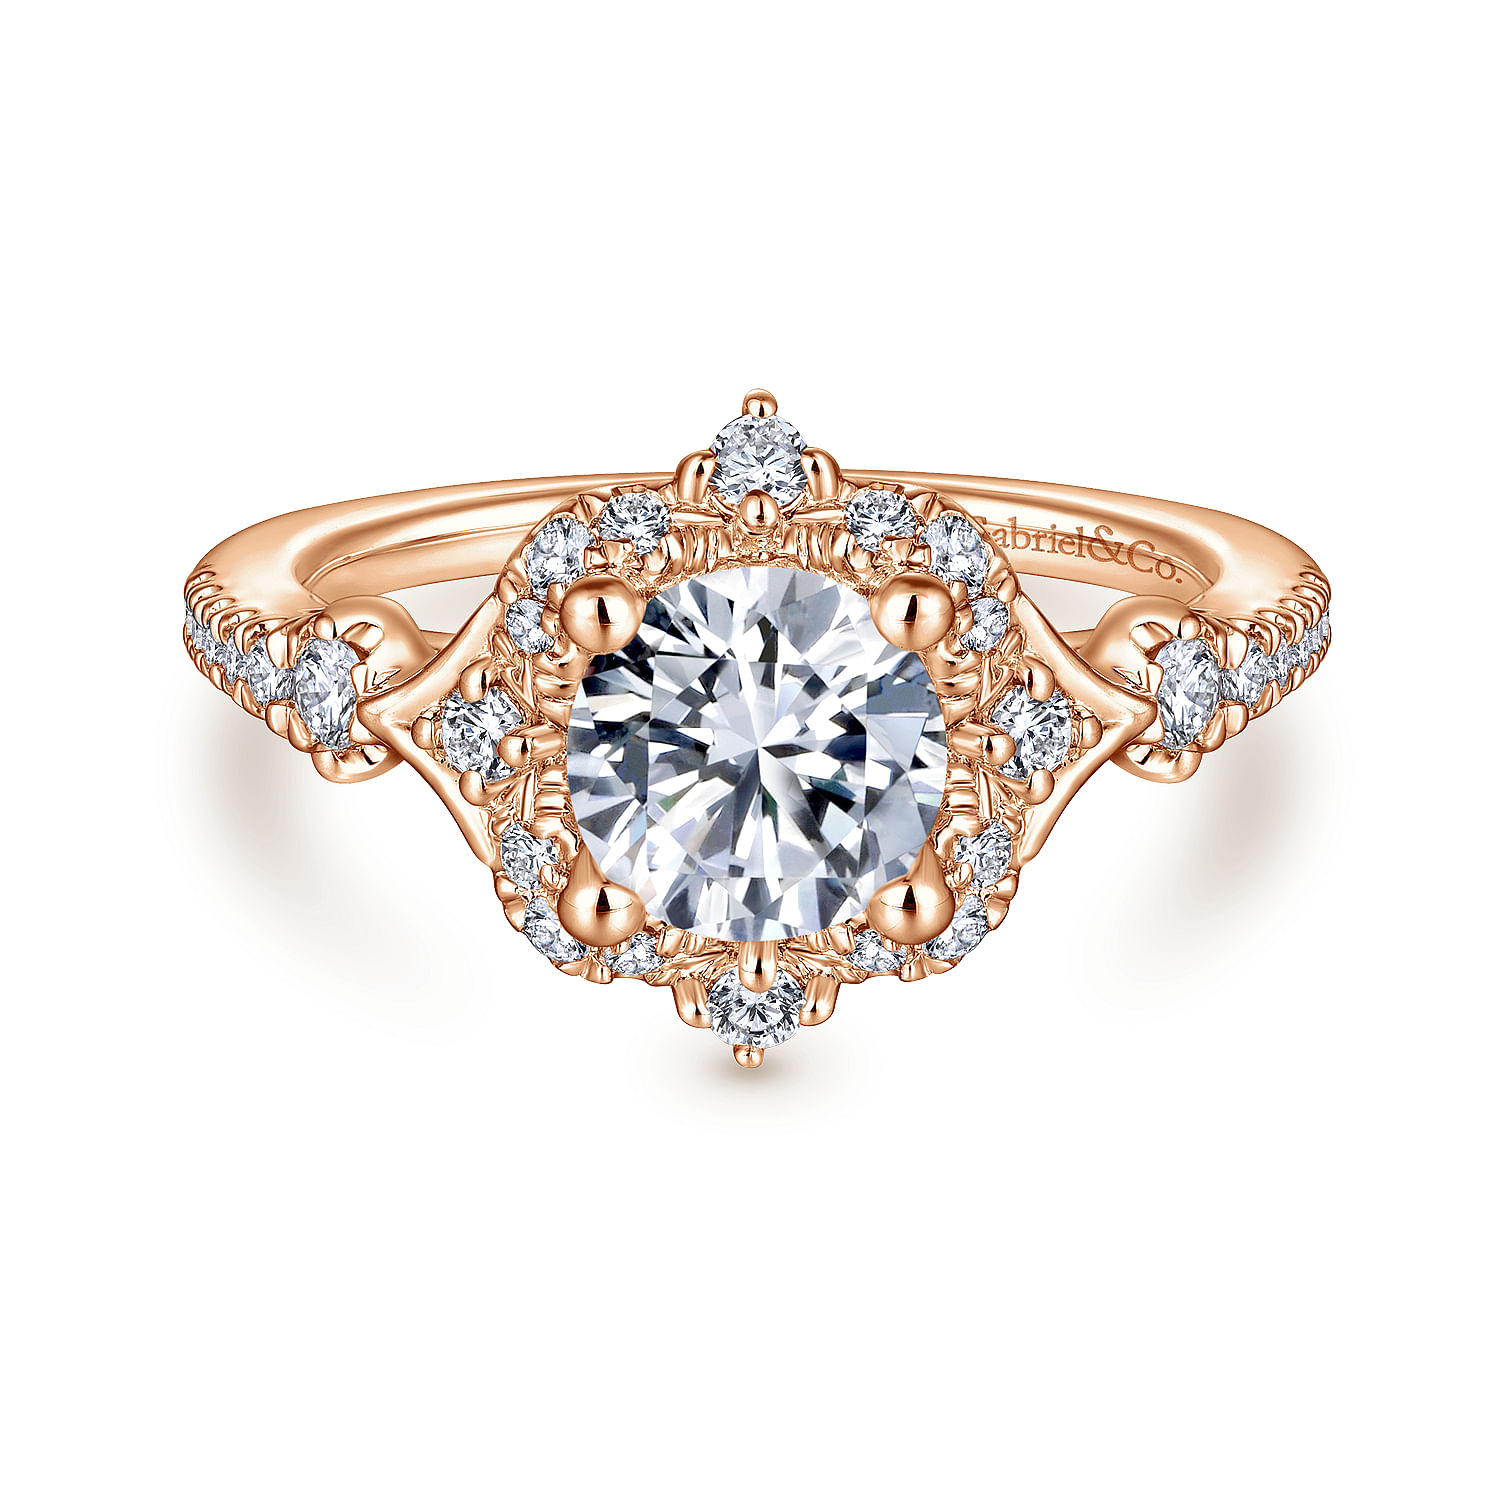 Veronique - Unique 14K Rose Gold Vintage Inspired Halo Diamond Engagement Ring